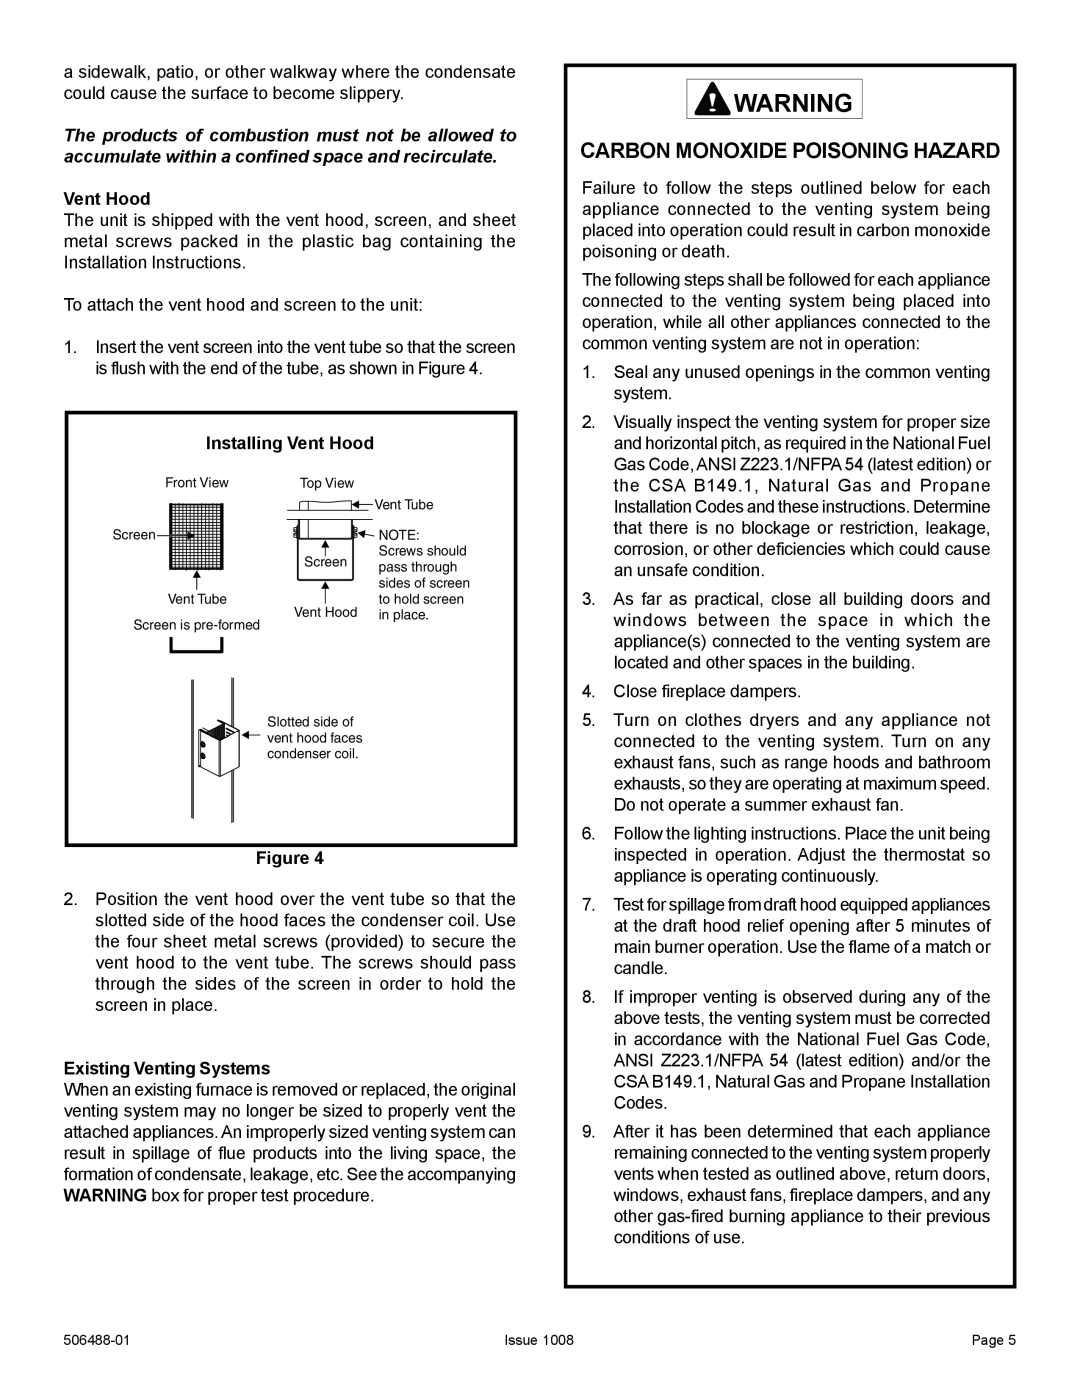 Allied Air Enterprises 4PGE manual Carbon Monoxide Poisoning Hazard, Installing Vent Hood, Existing Venting Systems 